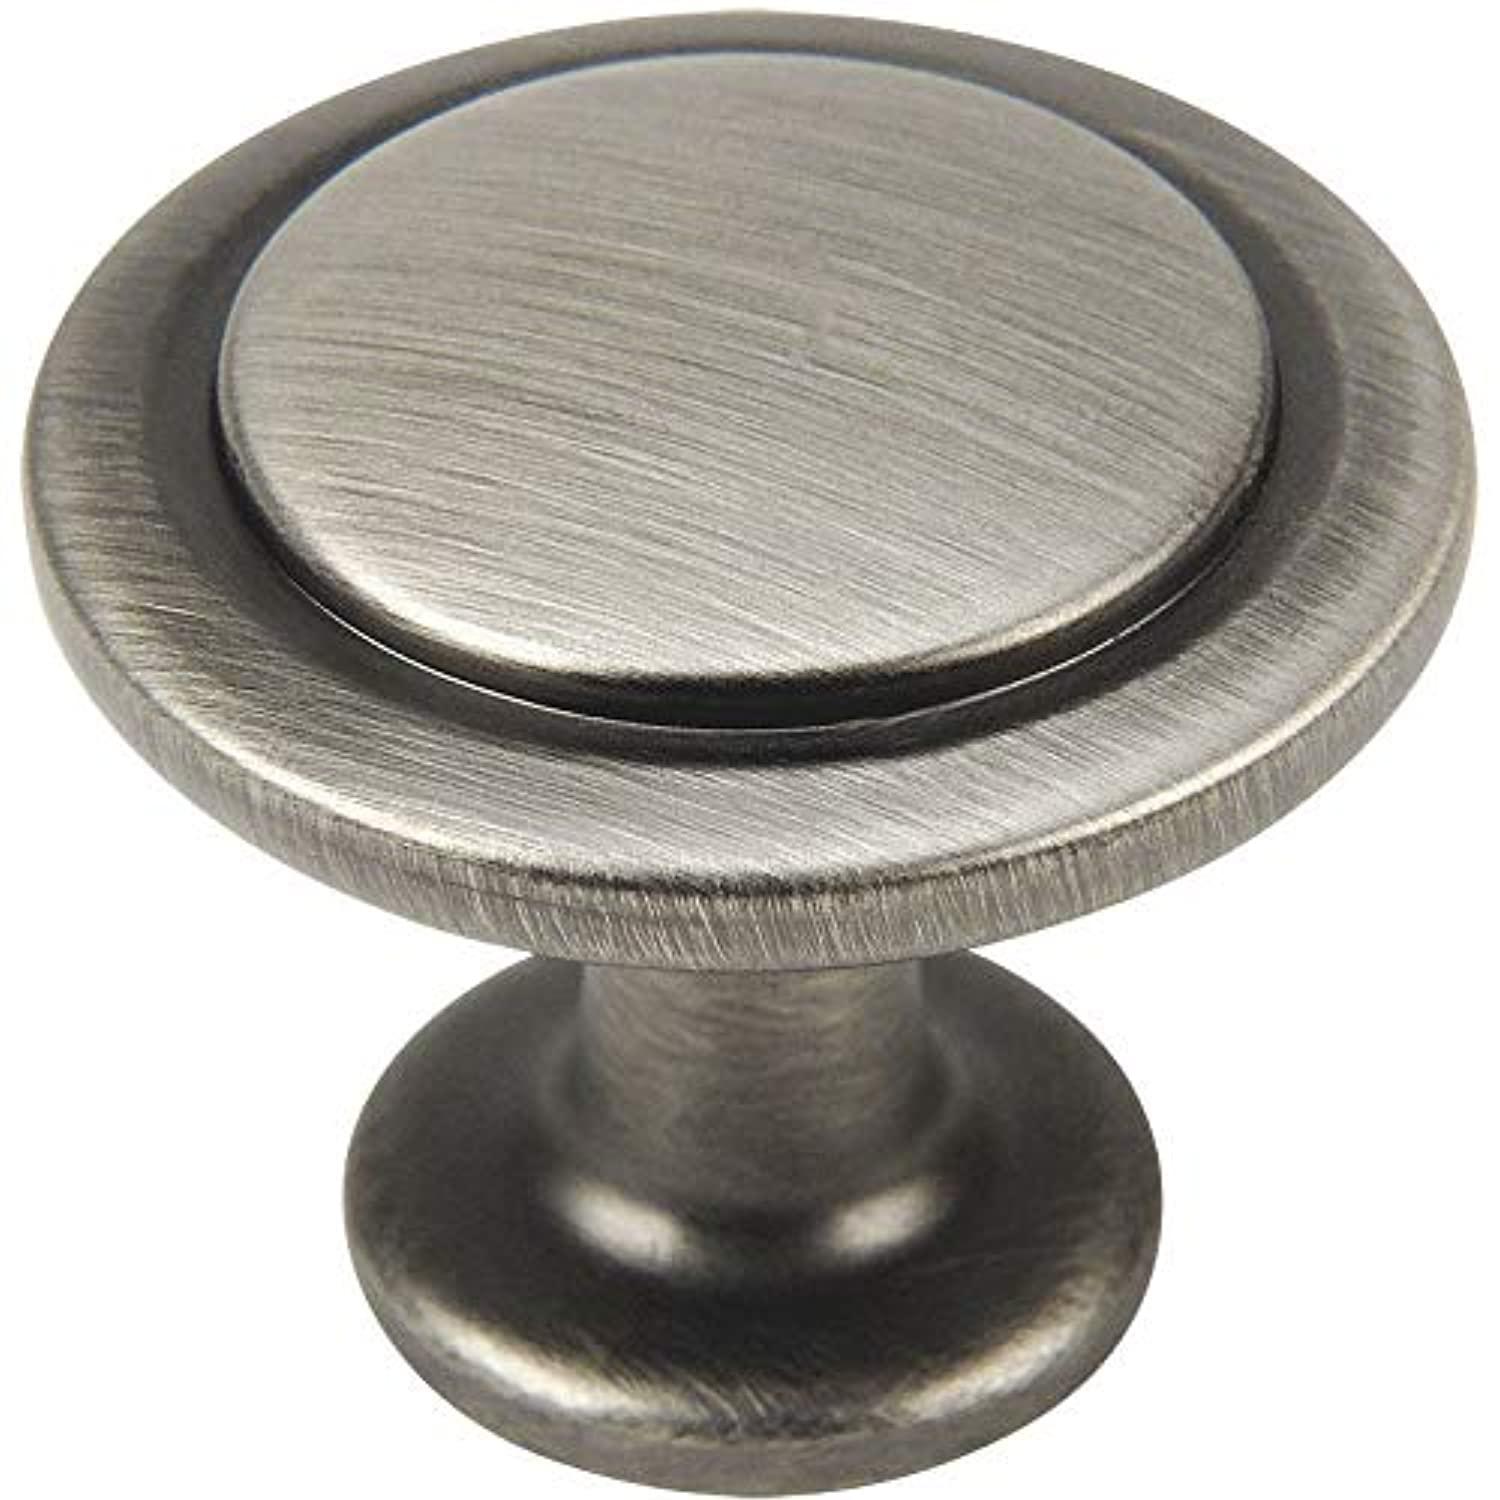 cosmas 5560as antique silver cabinet hardware round knob - 1-1/4" diameter - 25 pack